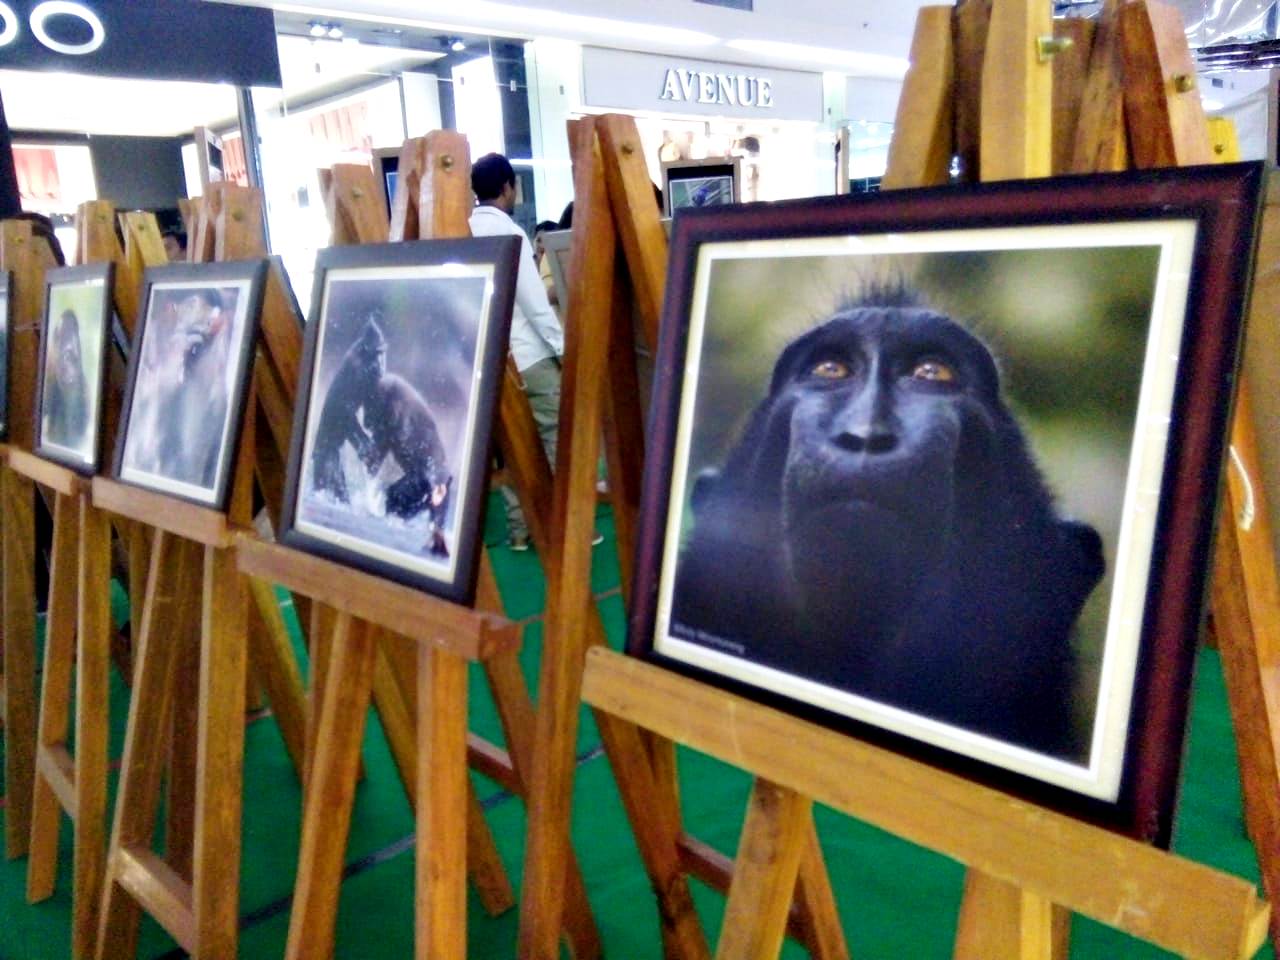 Yayasan Selamatkan Yaki menggelar Ekshibisi foto untuk mempromosikan karya fotografer lokal | Foto: Themmy Doaly/Mongabay Indonesia